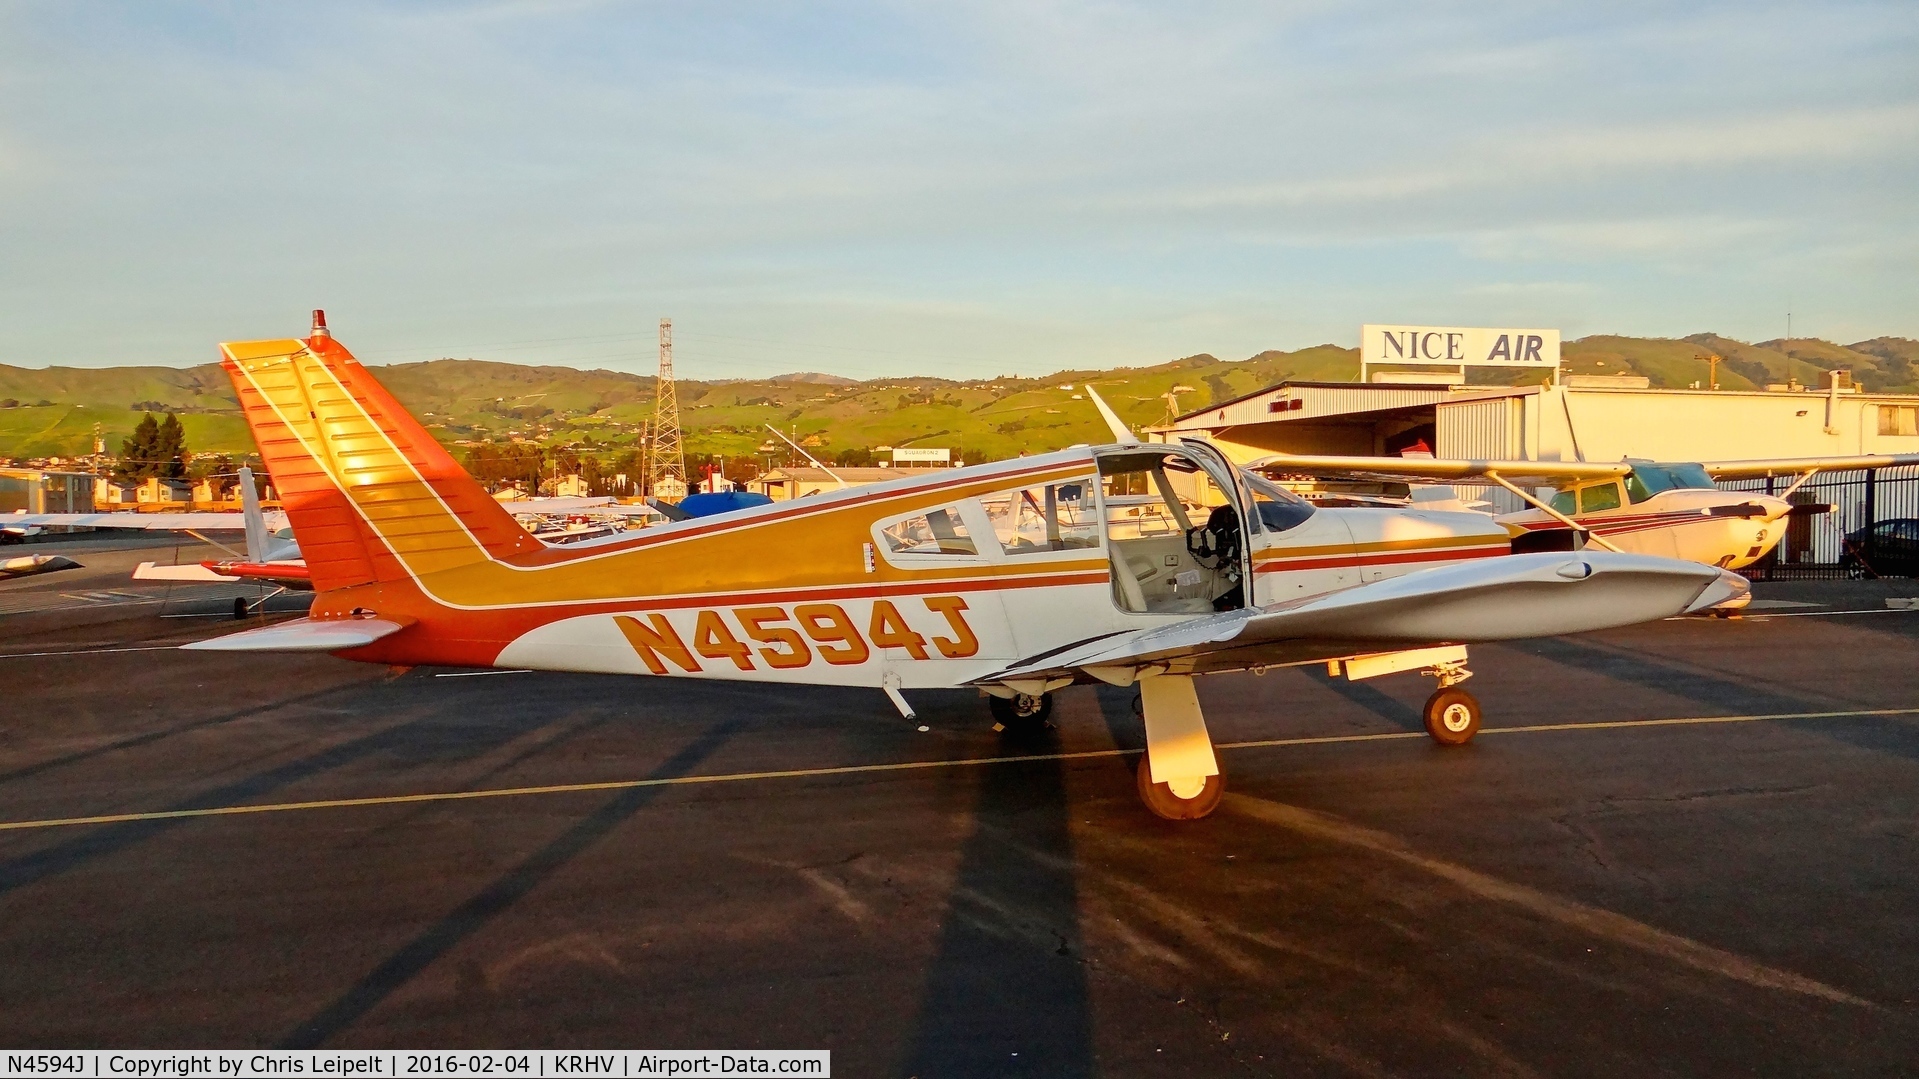 N4594J, 1968 Piper PA-28R-180 Cherokee Arrow C/N 28R-30470, Foluain Fabhcun LLC (Reno, NV) 1968 Piper PA-28R-180 parked next to Nice Air at Reid Hillview Airport, San Jose, CA.